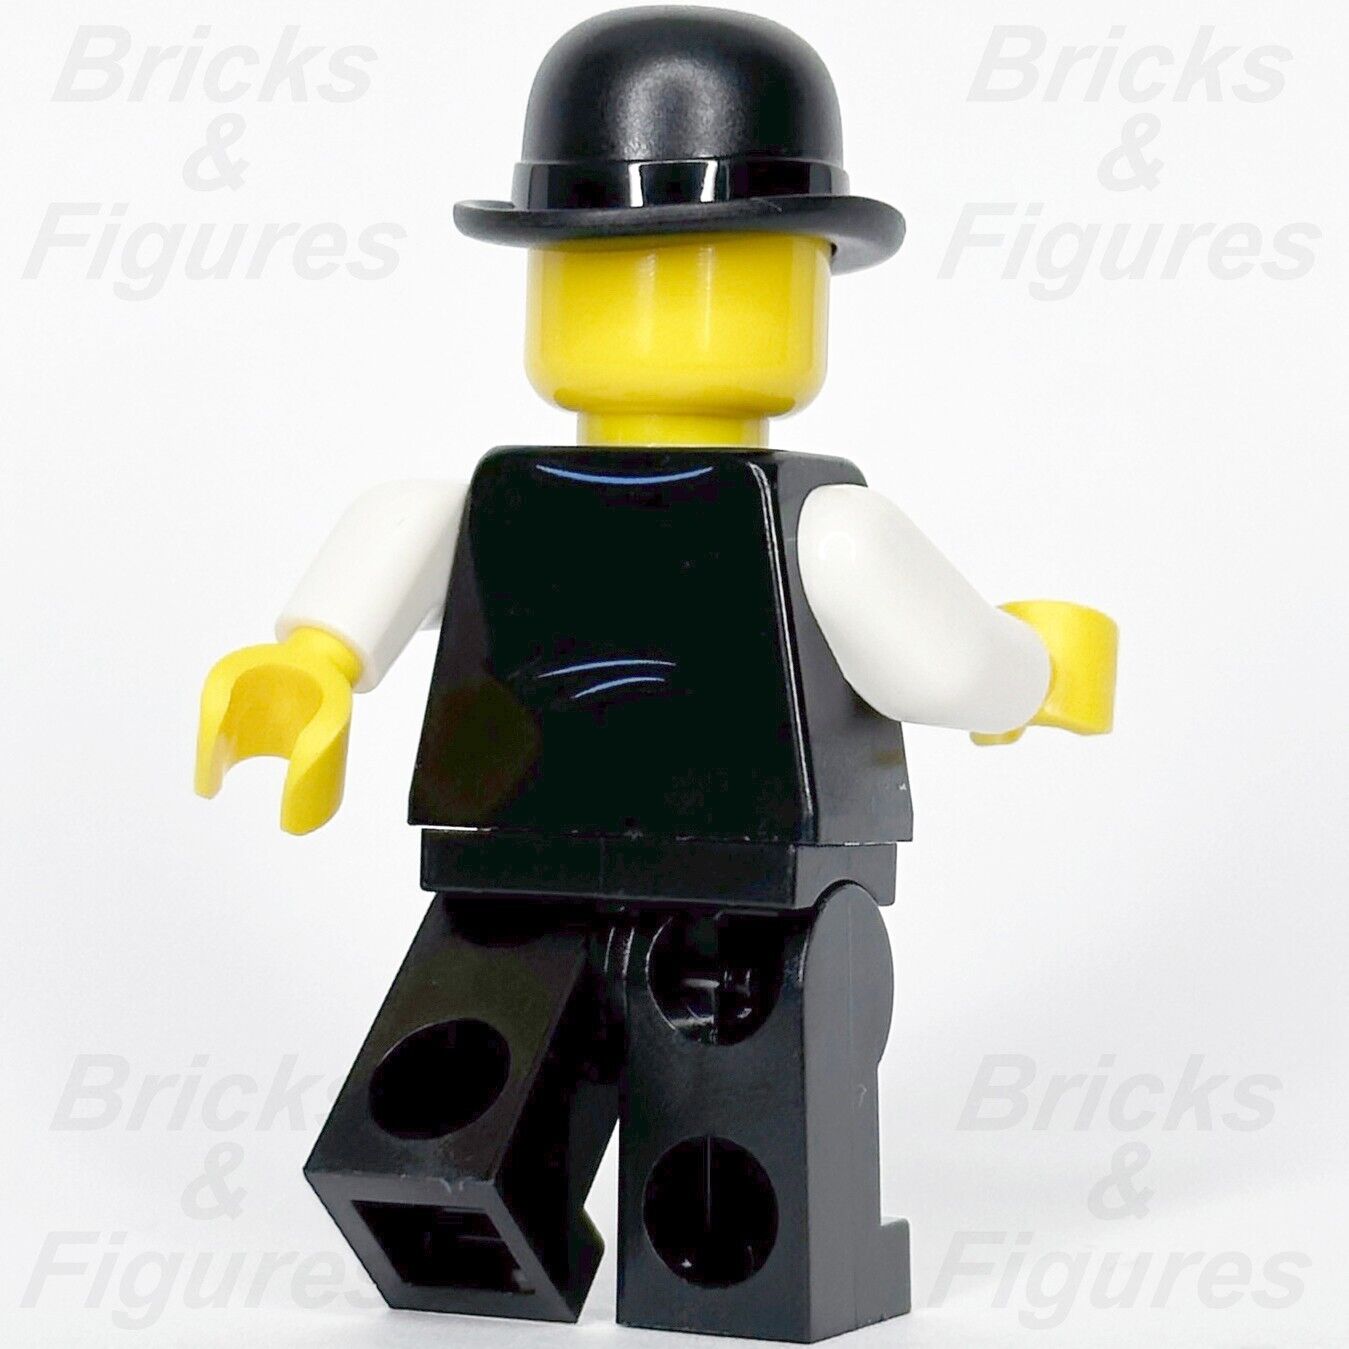 LEGO Creator Accountant Minifigure Expert 10297 twn421 Town Male Minifig - Bricks & Figures